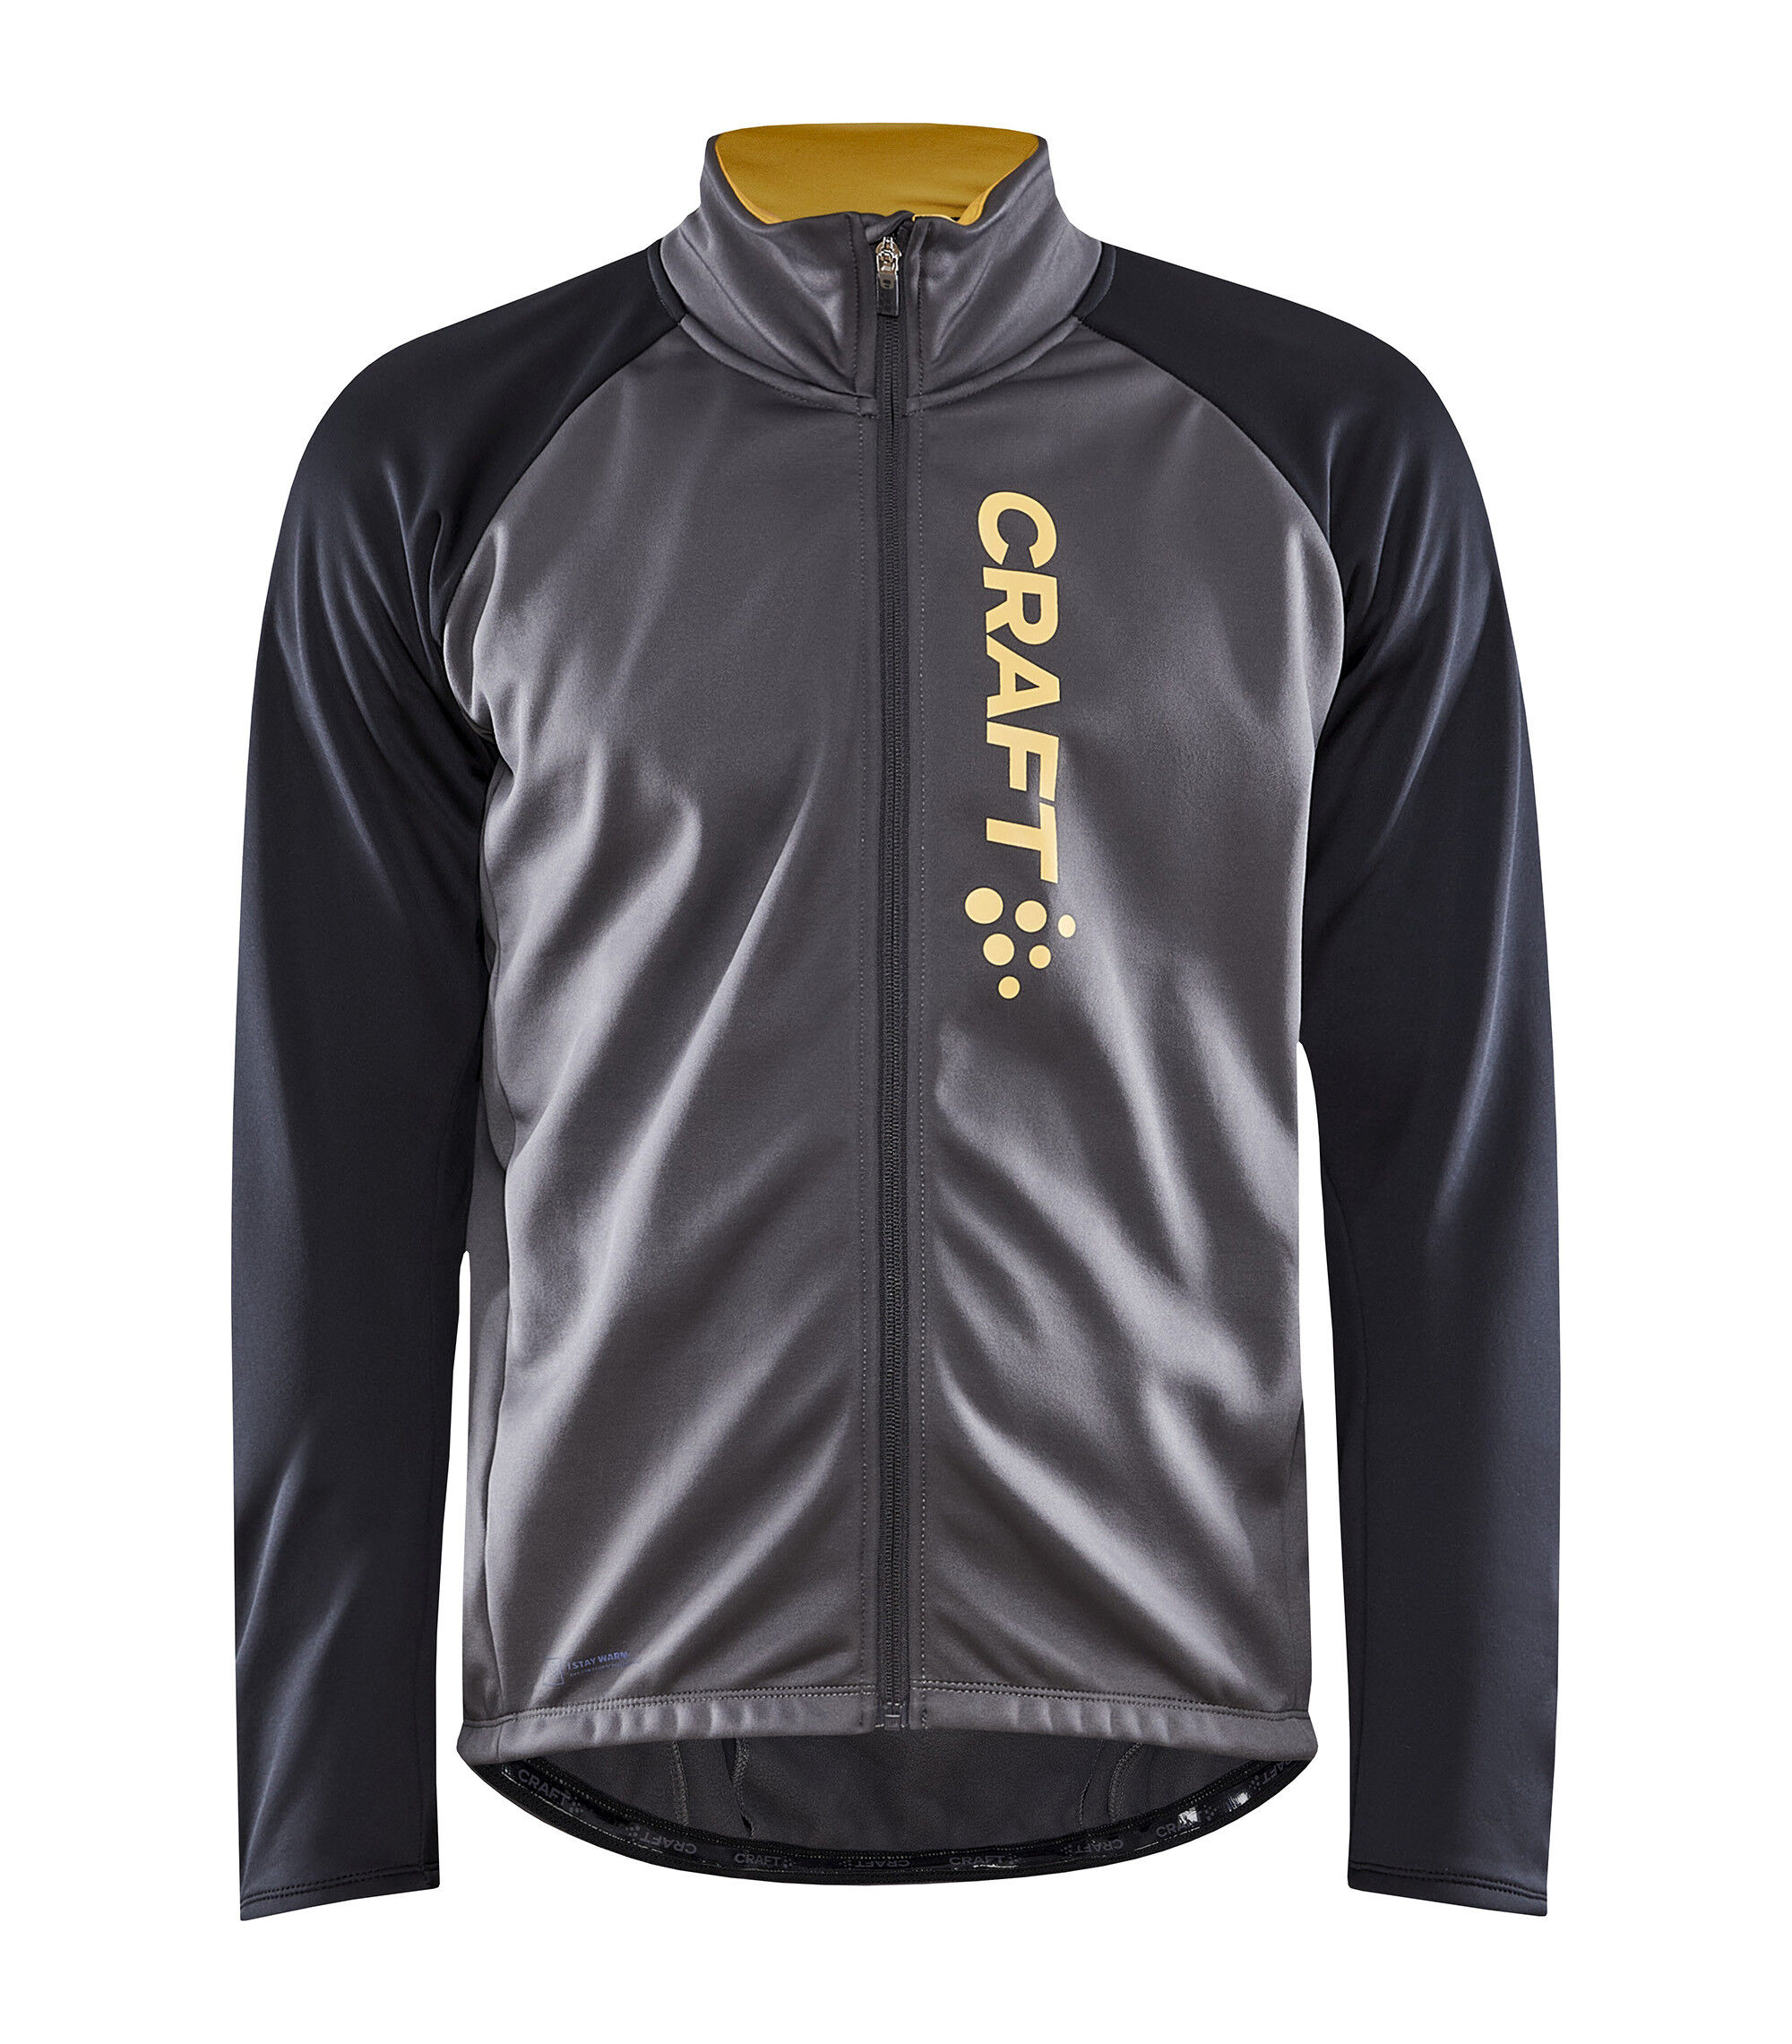 Craft Core Bike Subz Jacket - Chaqueta ciclismo - Hombre